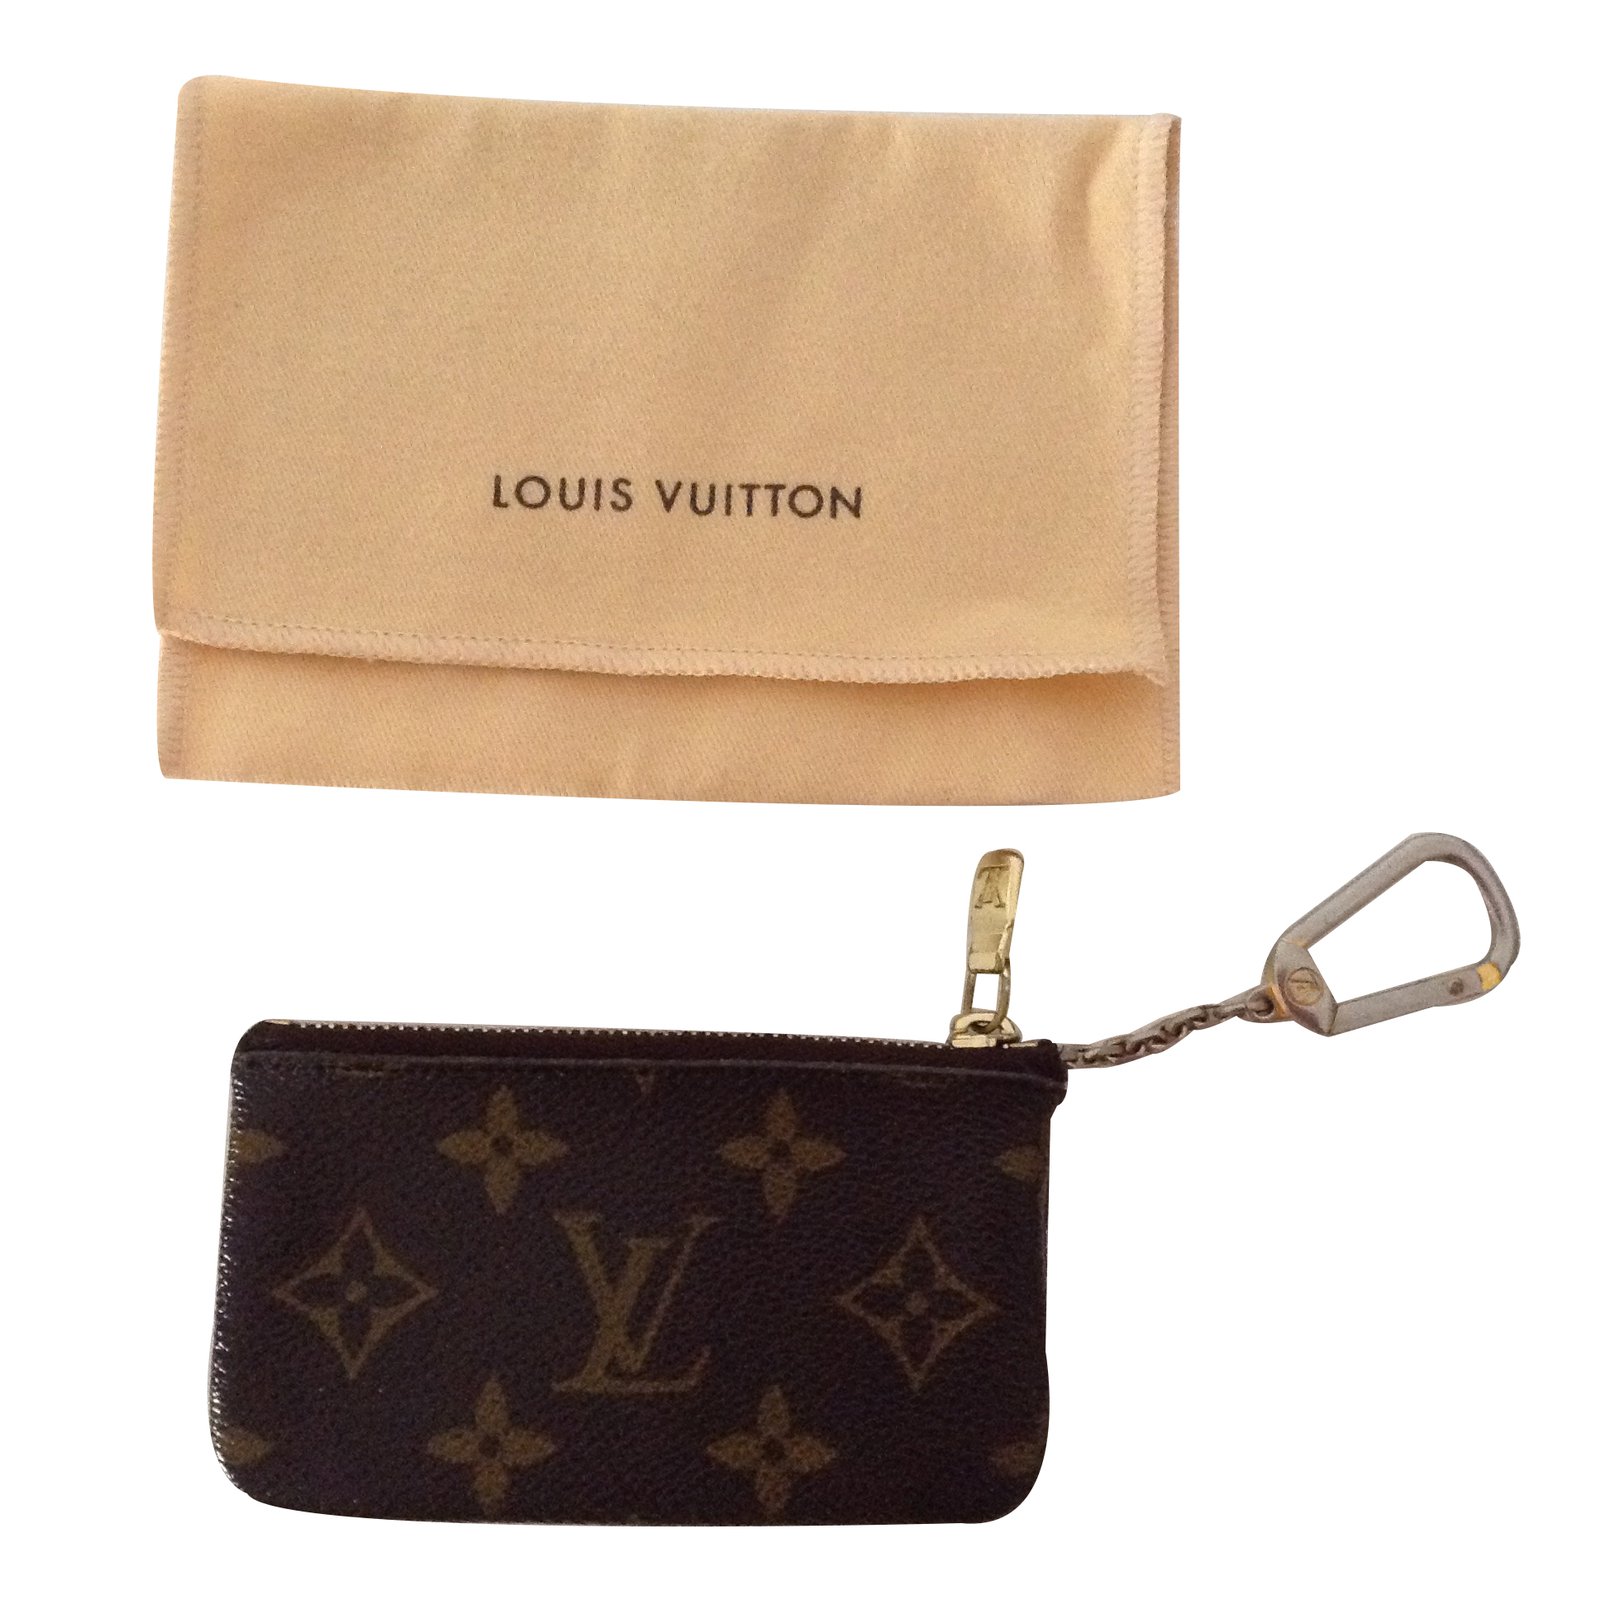 Shop Louis Vuitton DAMIER GRAPHITE 2019-20FW Key Pouch (N60155) by